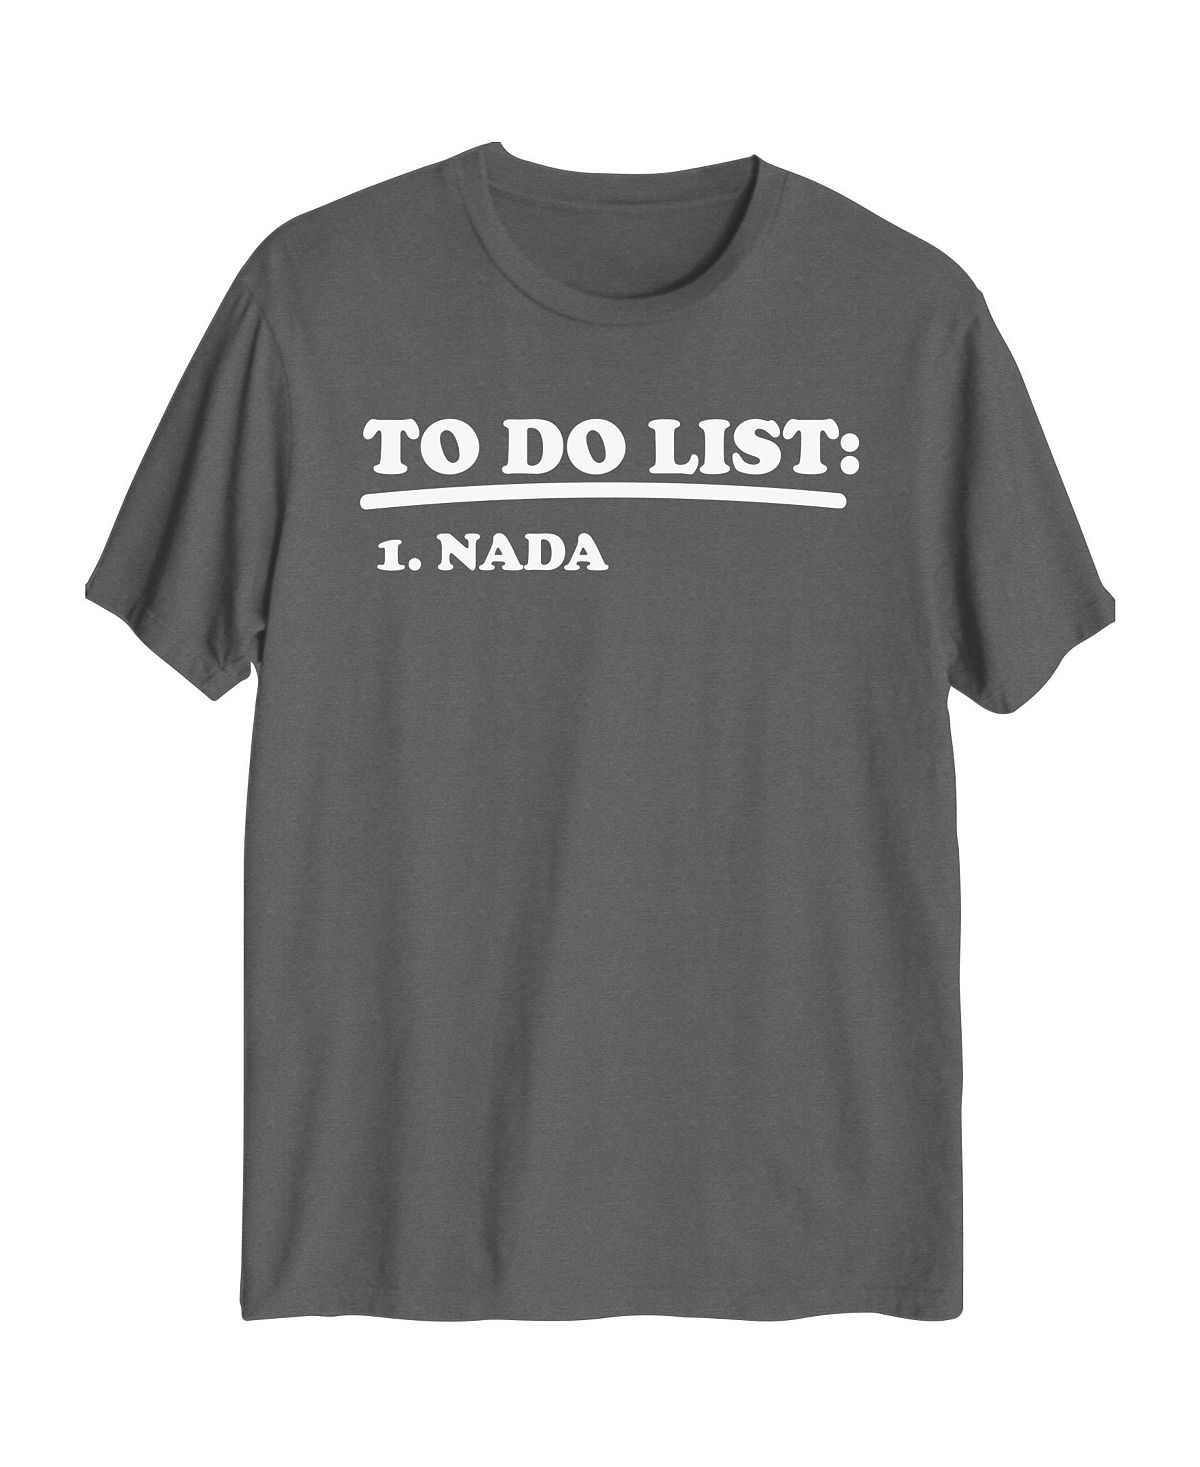 Мужская гибридная футболка с рисунком Nada AIRWAVES